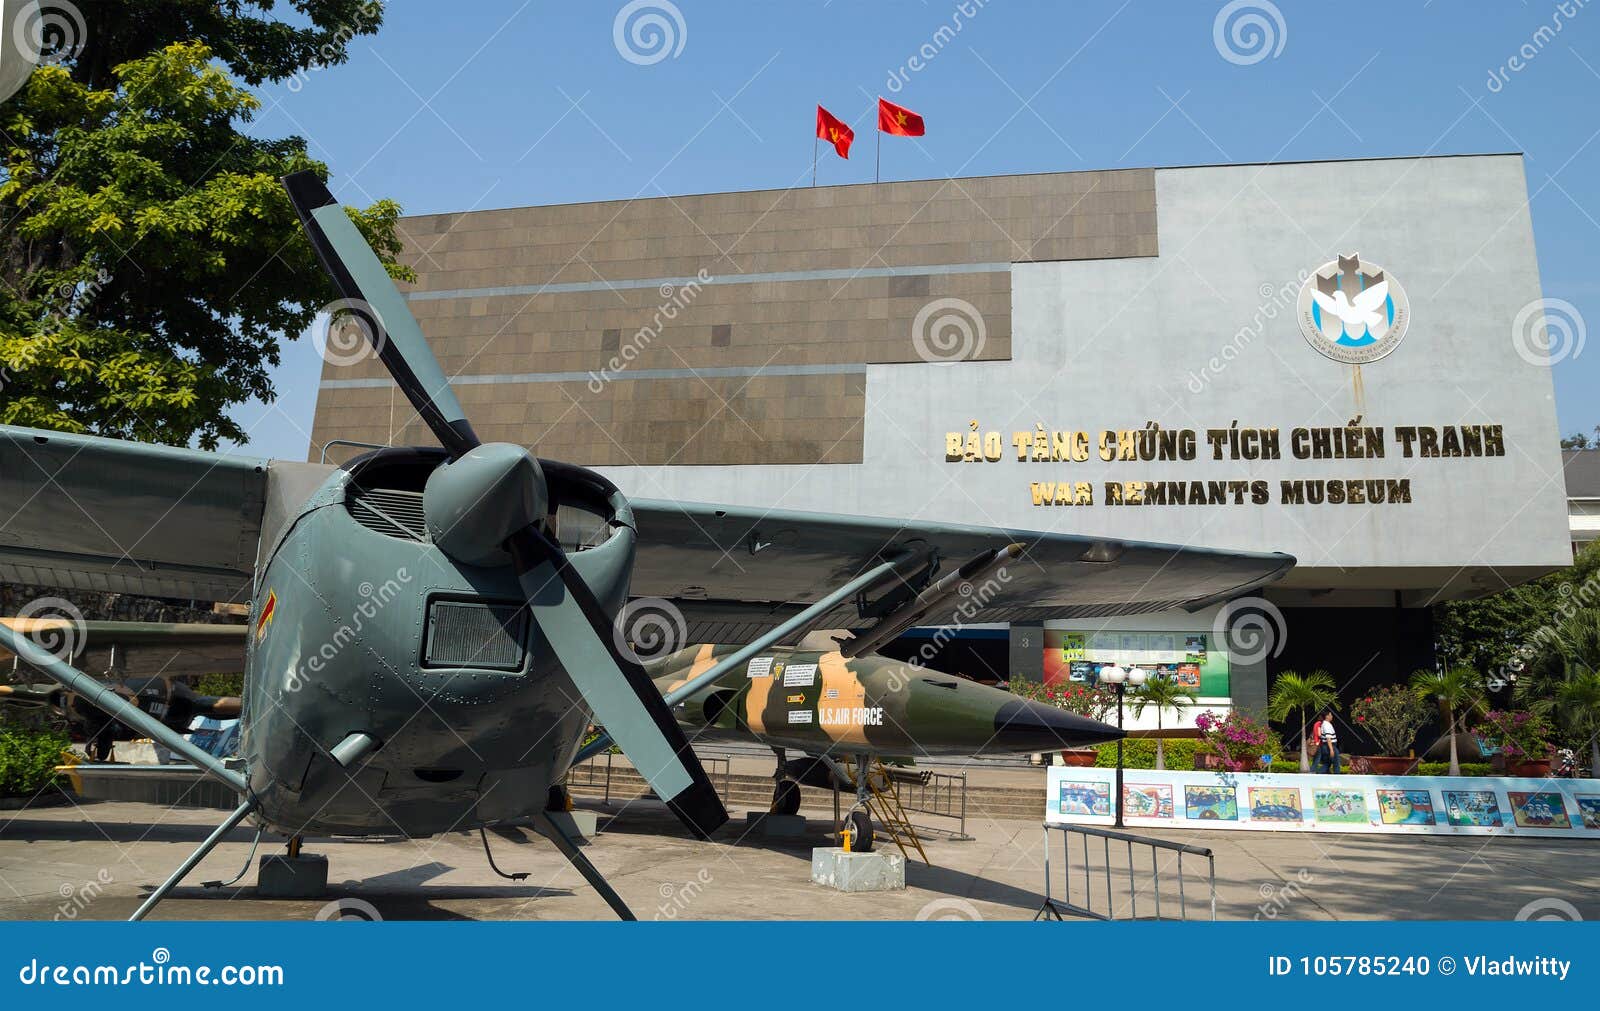 Army Plane US AIR FORCE Near Saigon Remnants Museum ...